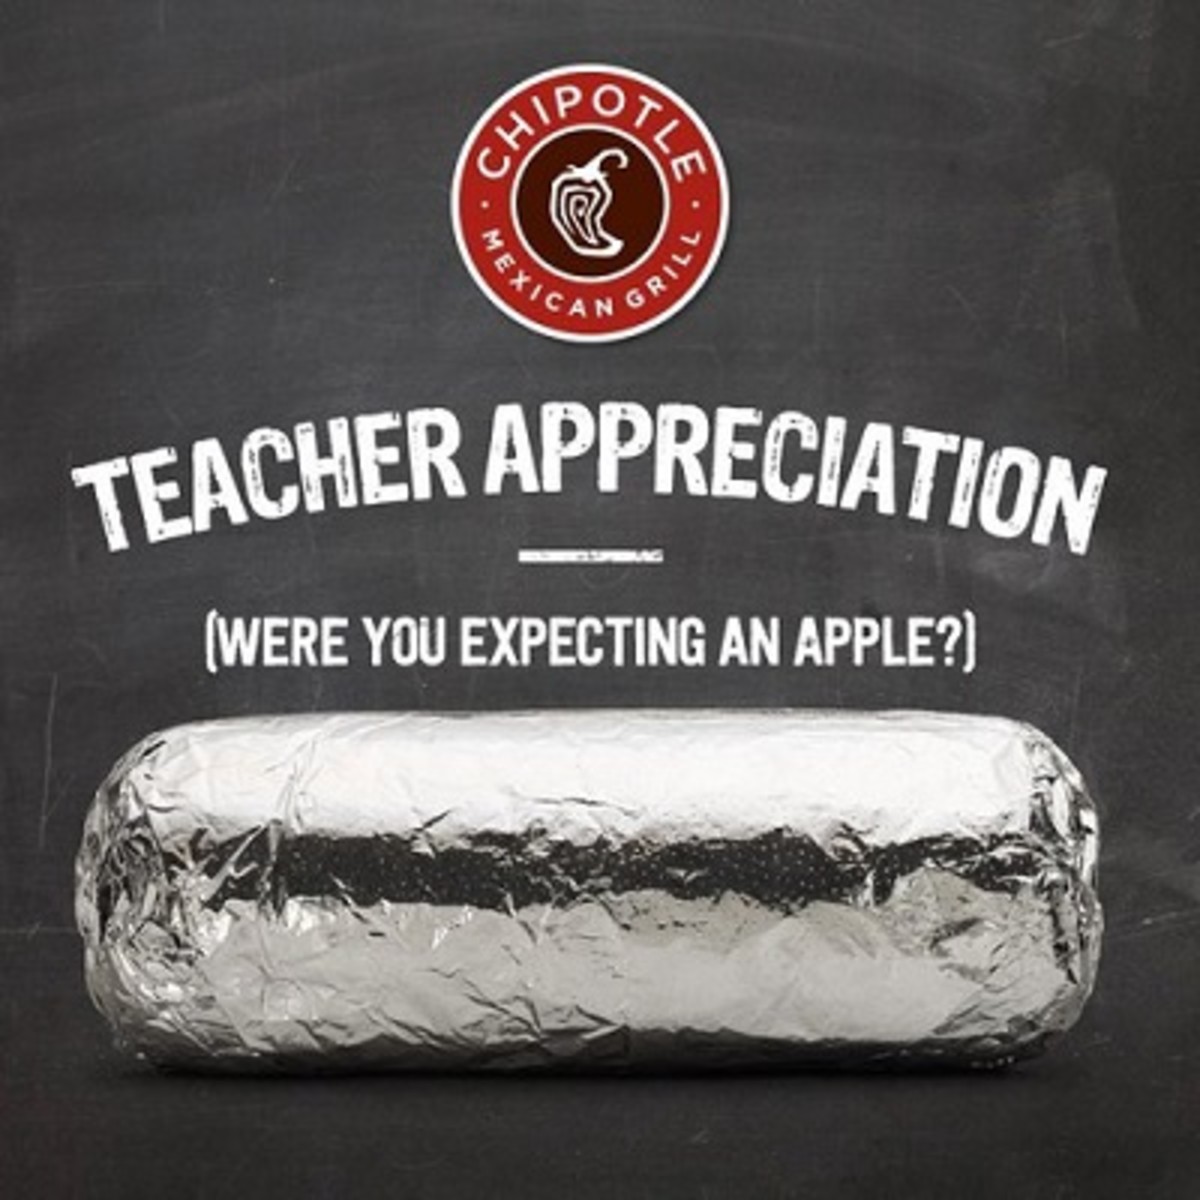 Chipotle Shows Love to Educators on “Teacher Appreciation Day” Complex